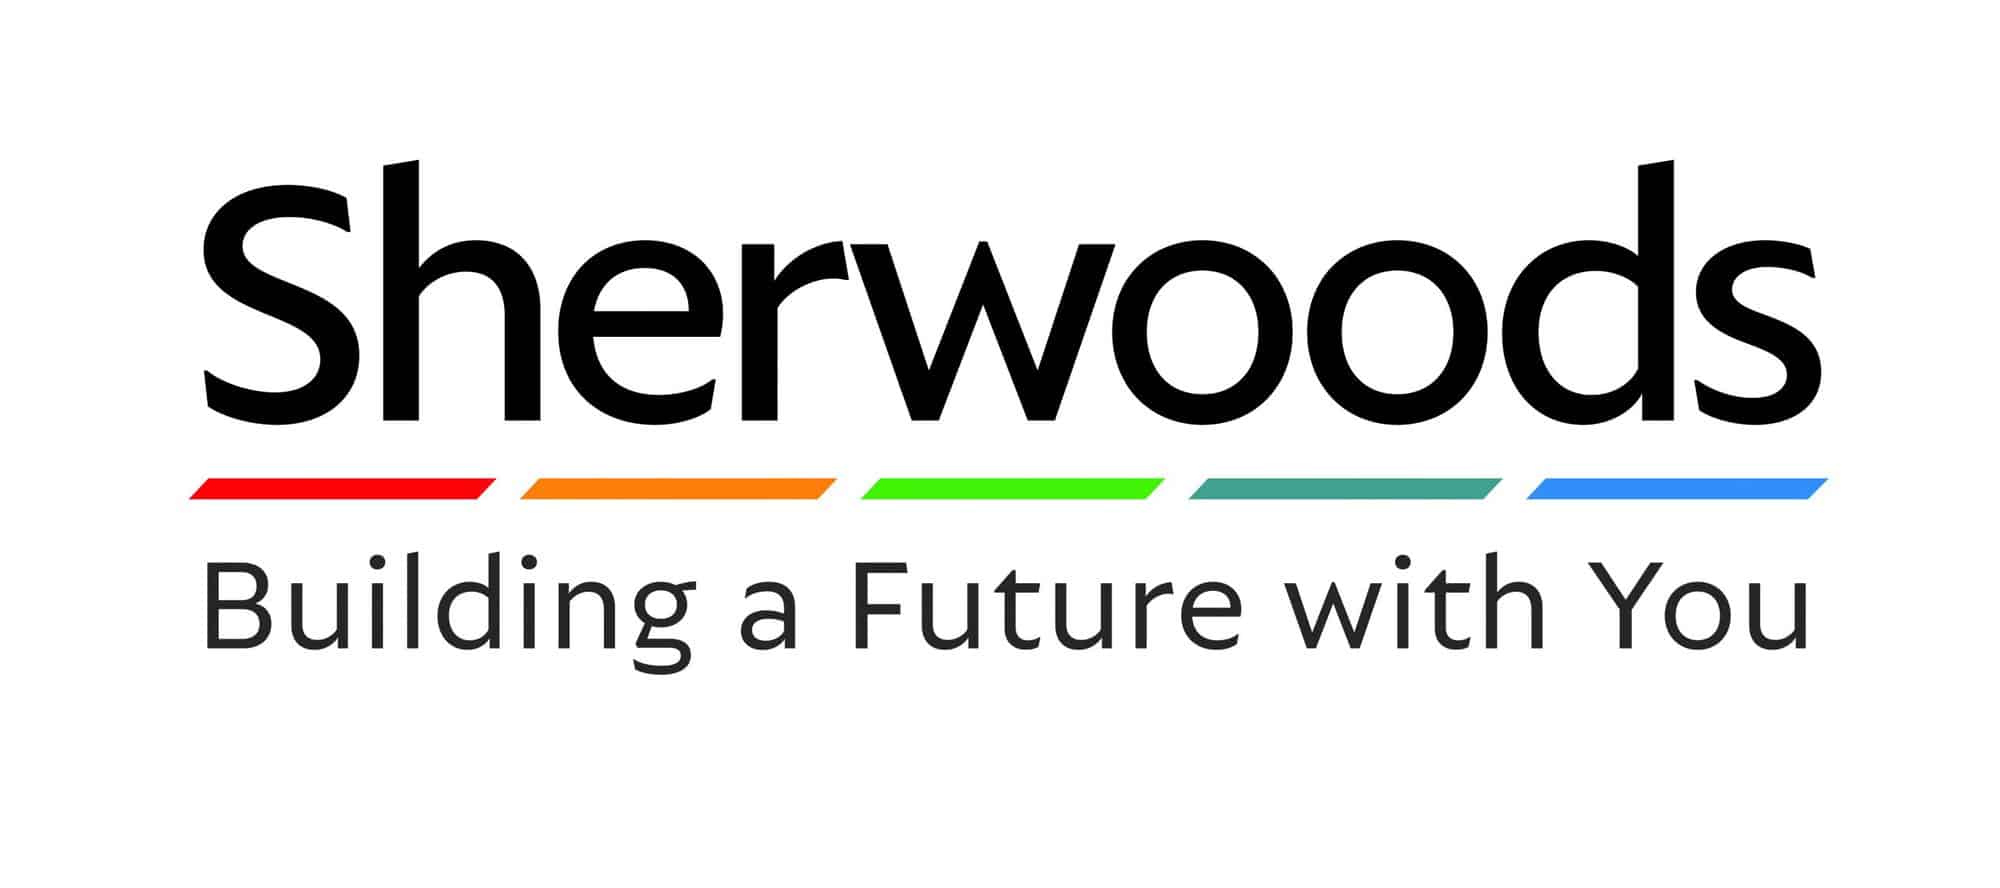 Sherwoods logo